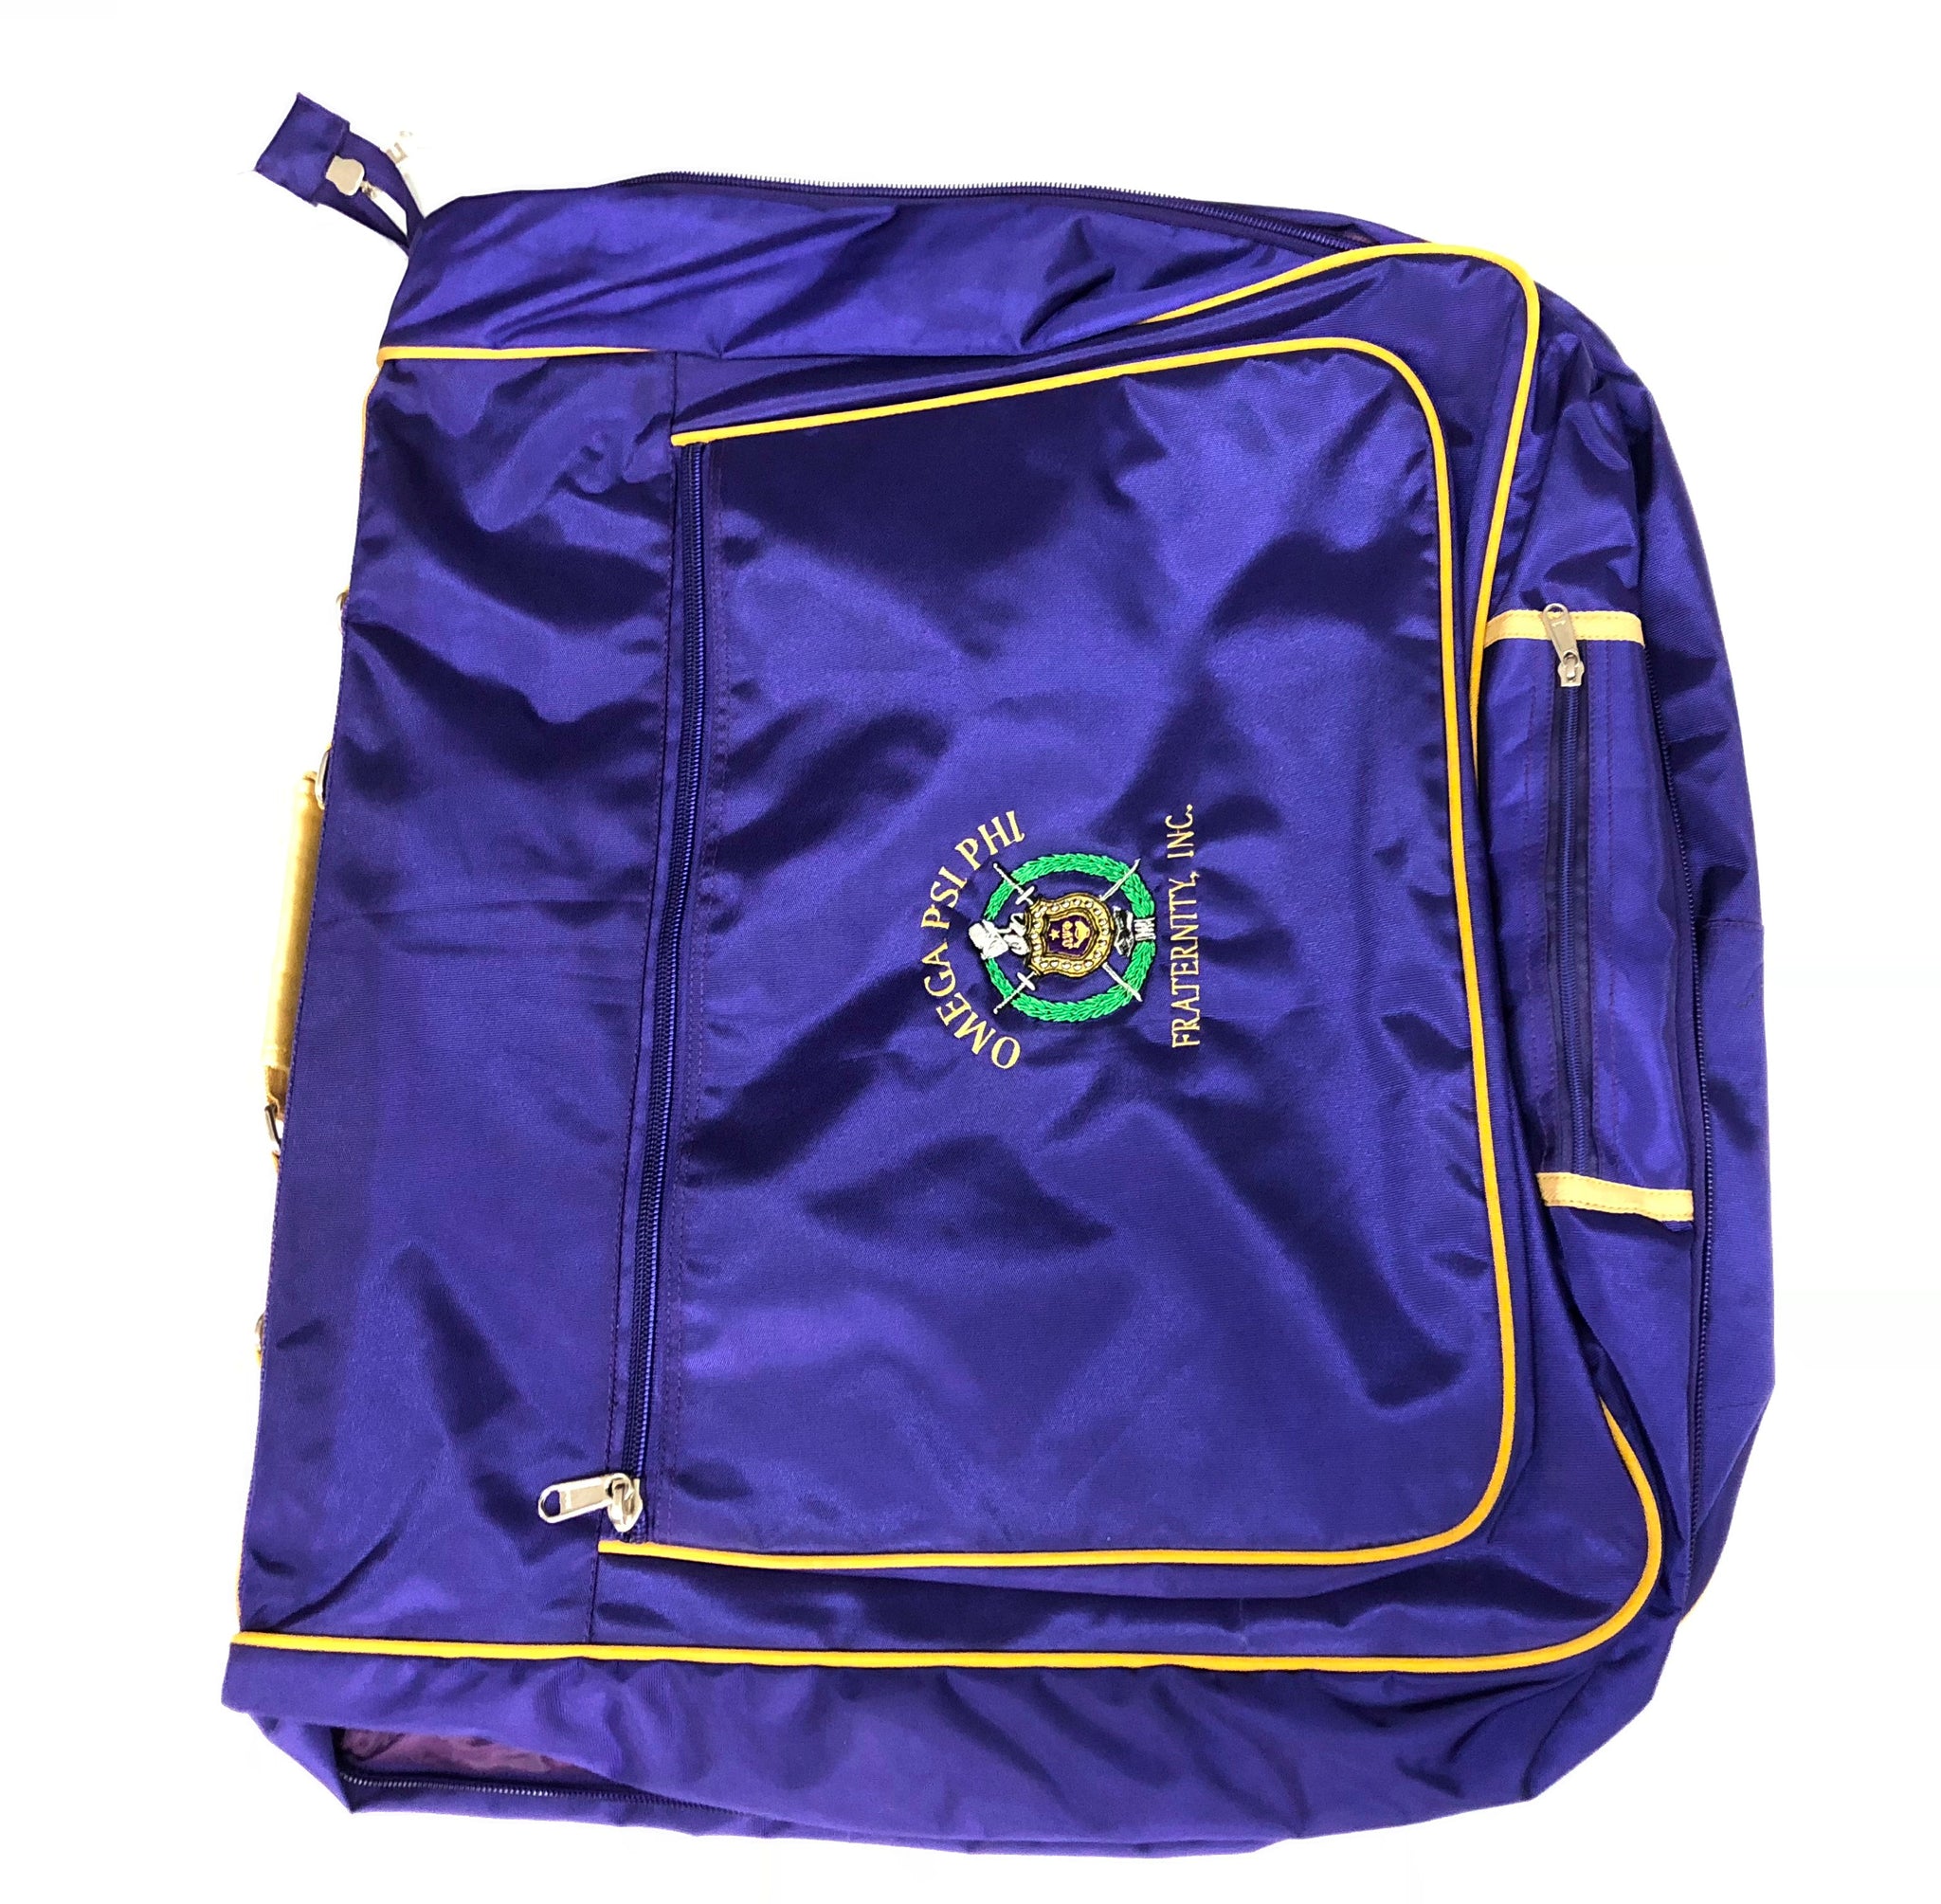 Omega Psi Phi Fraternity Polyester PVC Coated Garment Bag for travelli